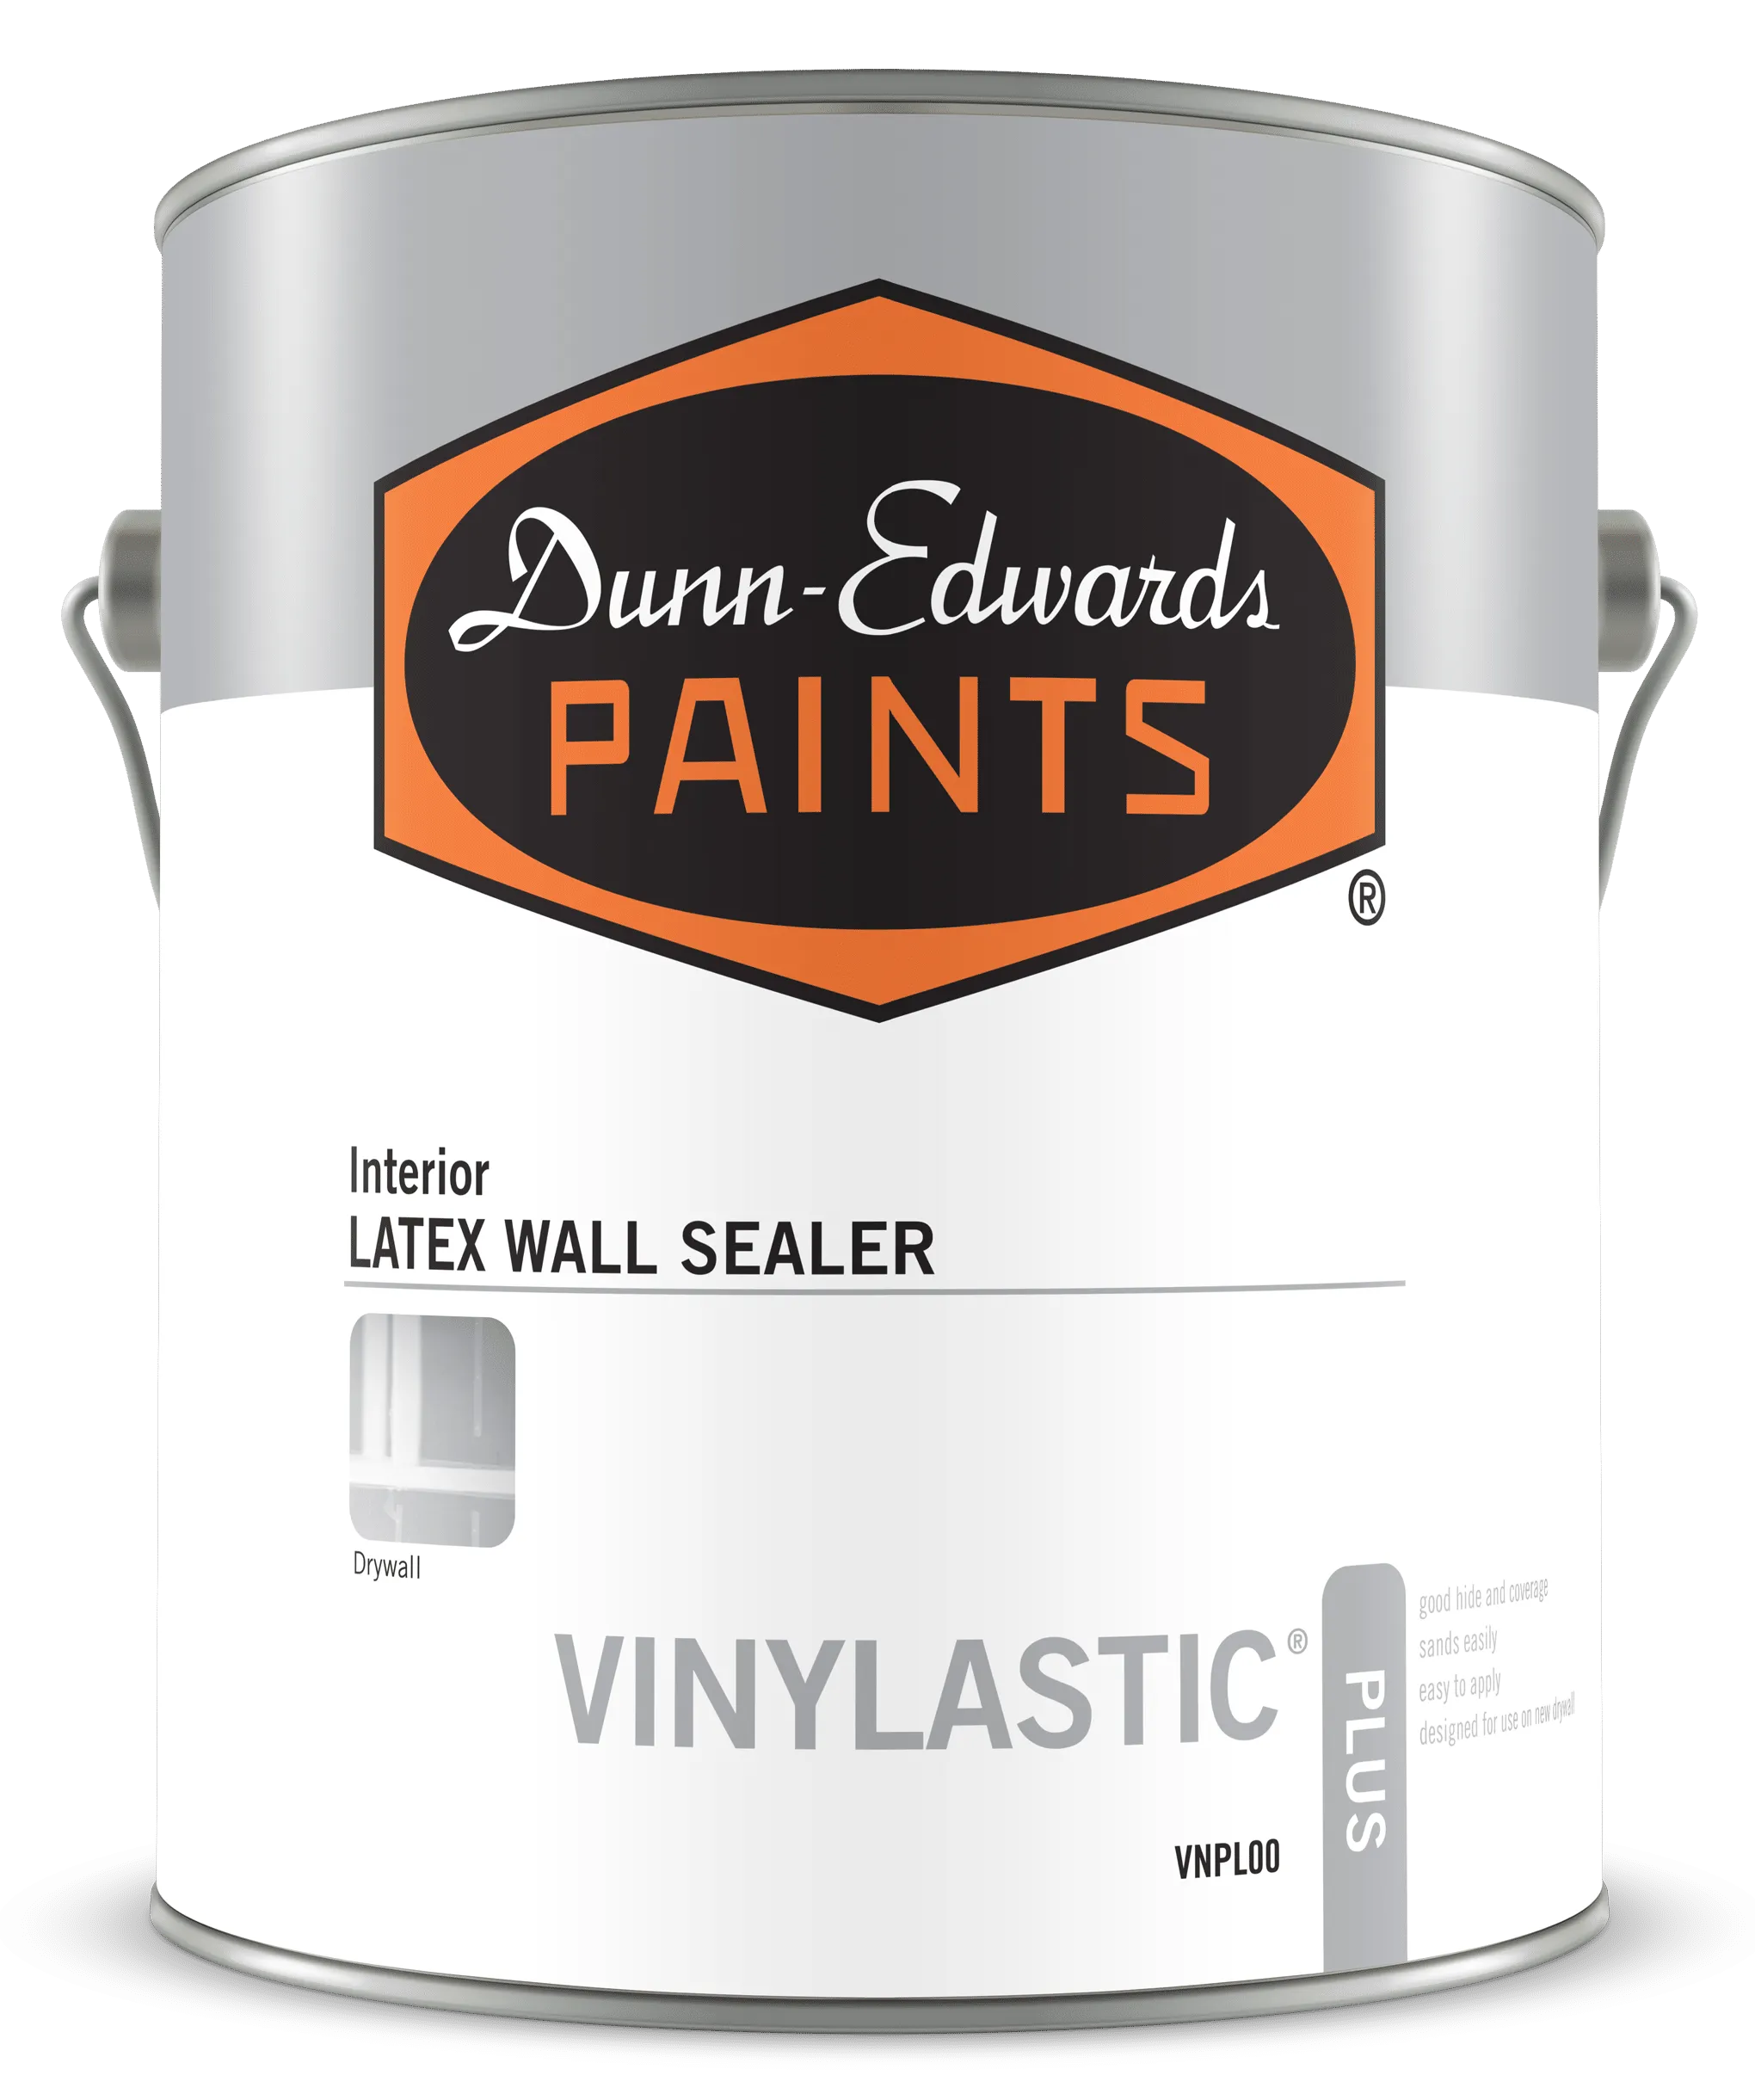 VINYLASTIC Plus Interior Latex Wall Sealer Can